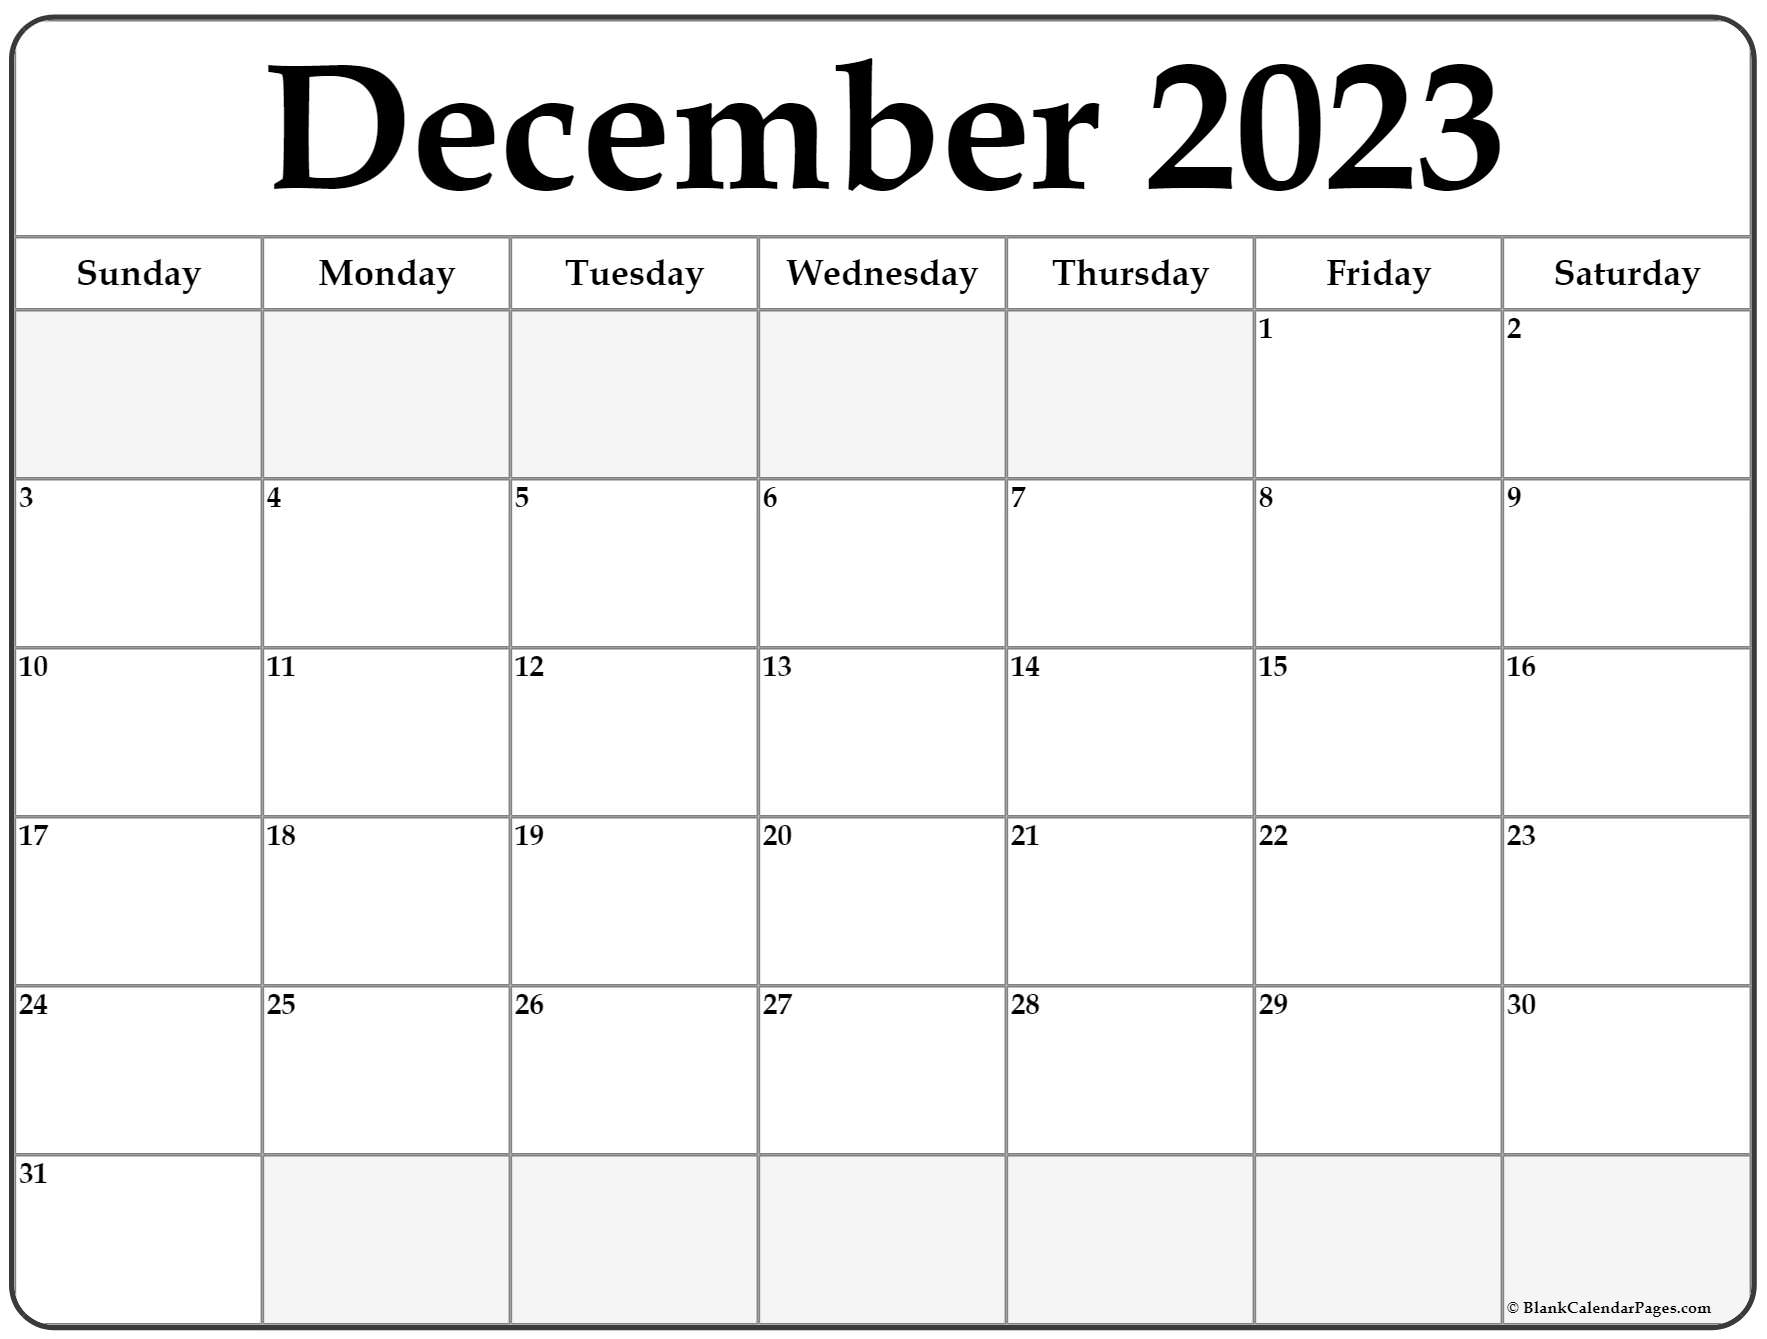 December 2023 Printable Calendar Australia Ms Michel Zbinden Au December 2023 Calendar With